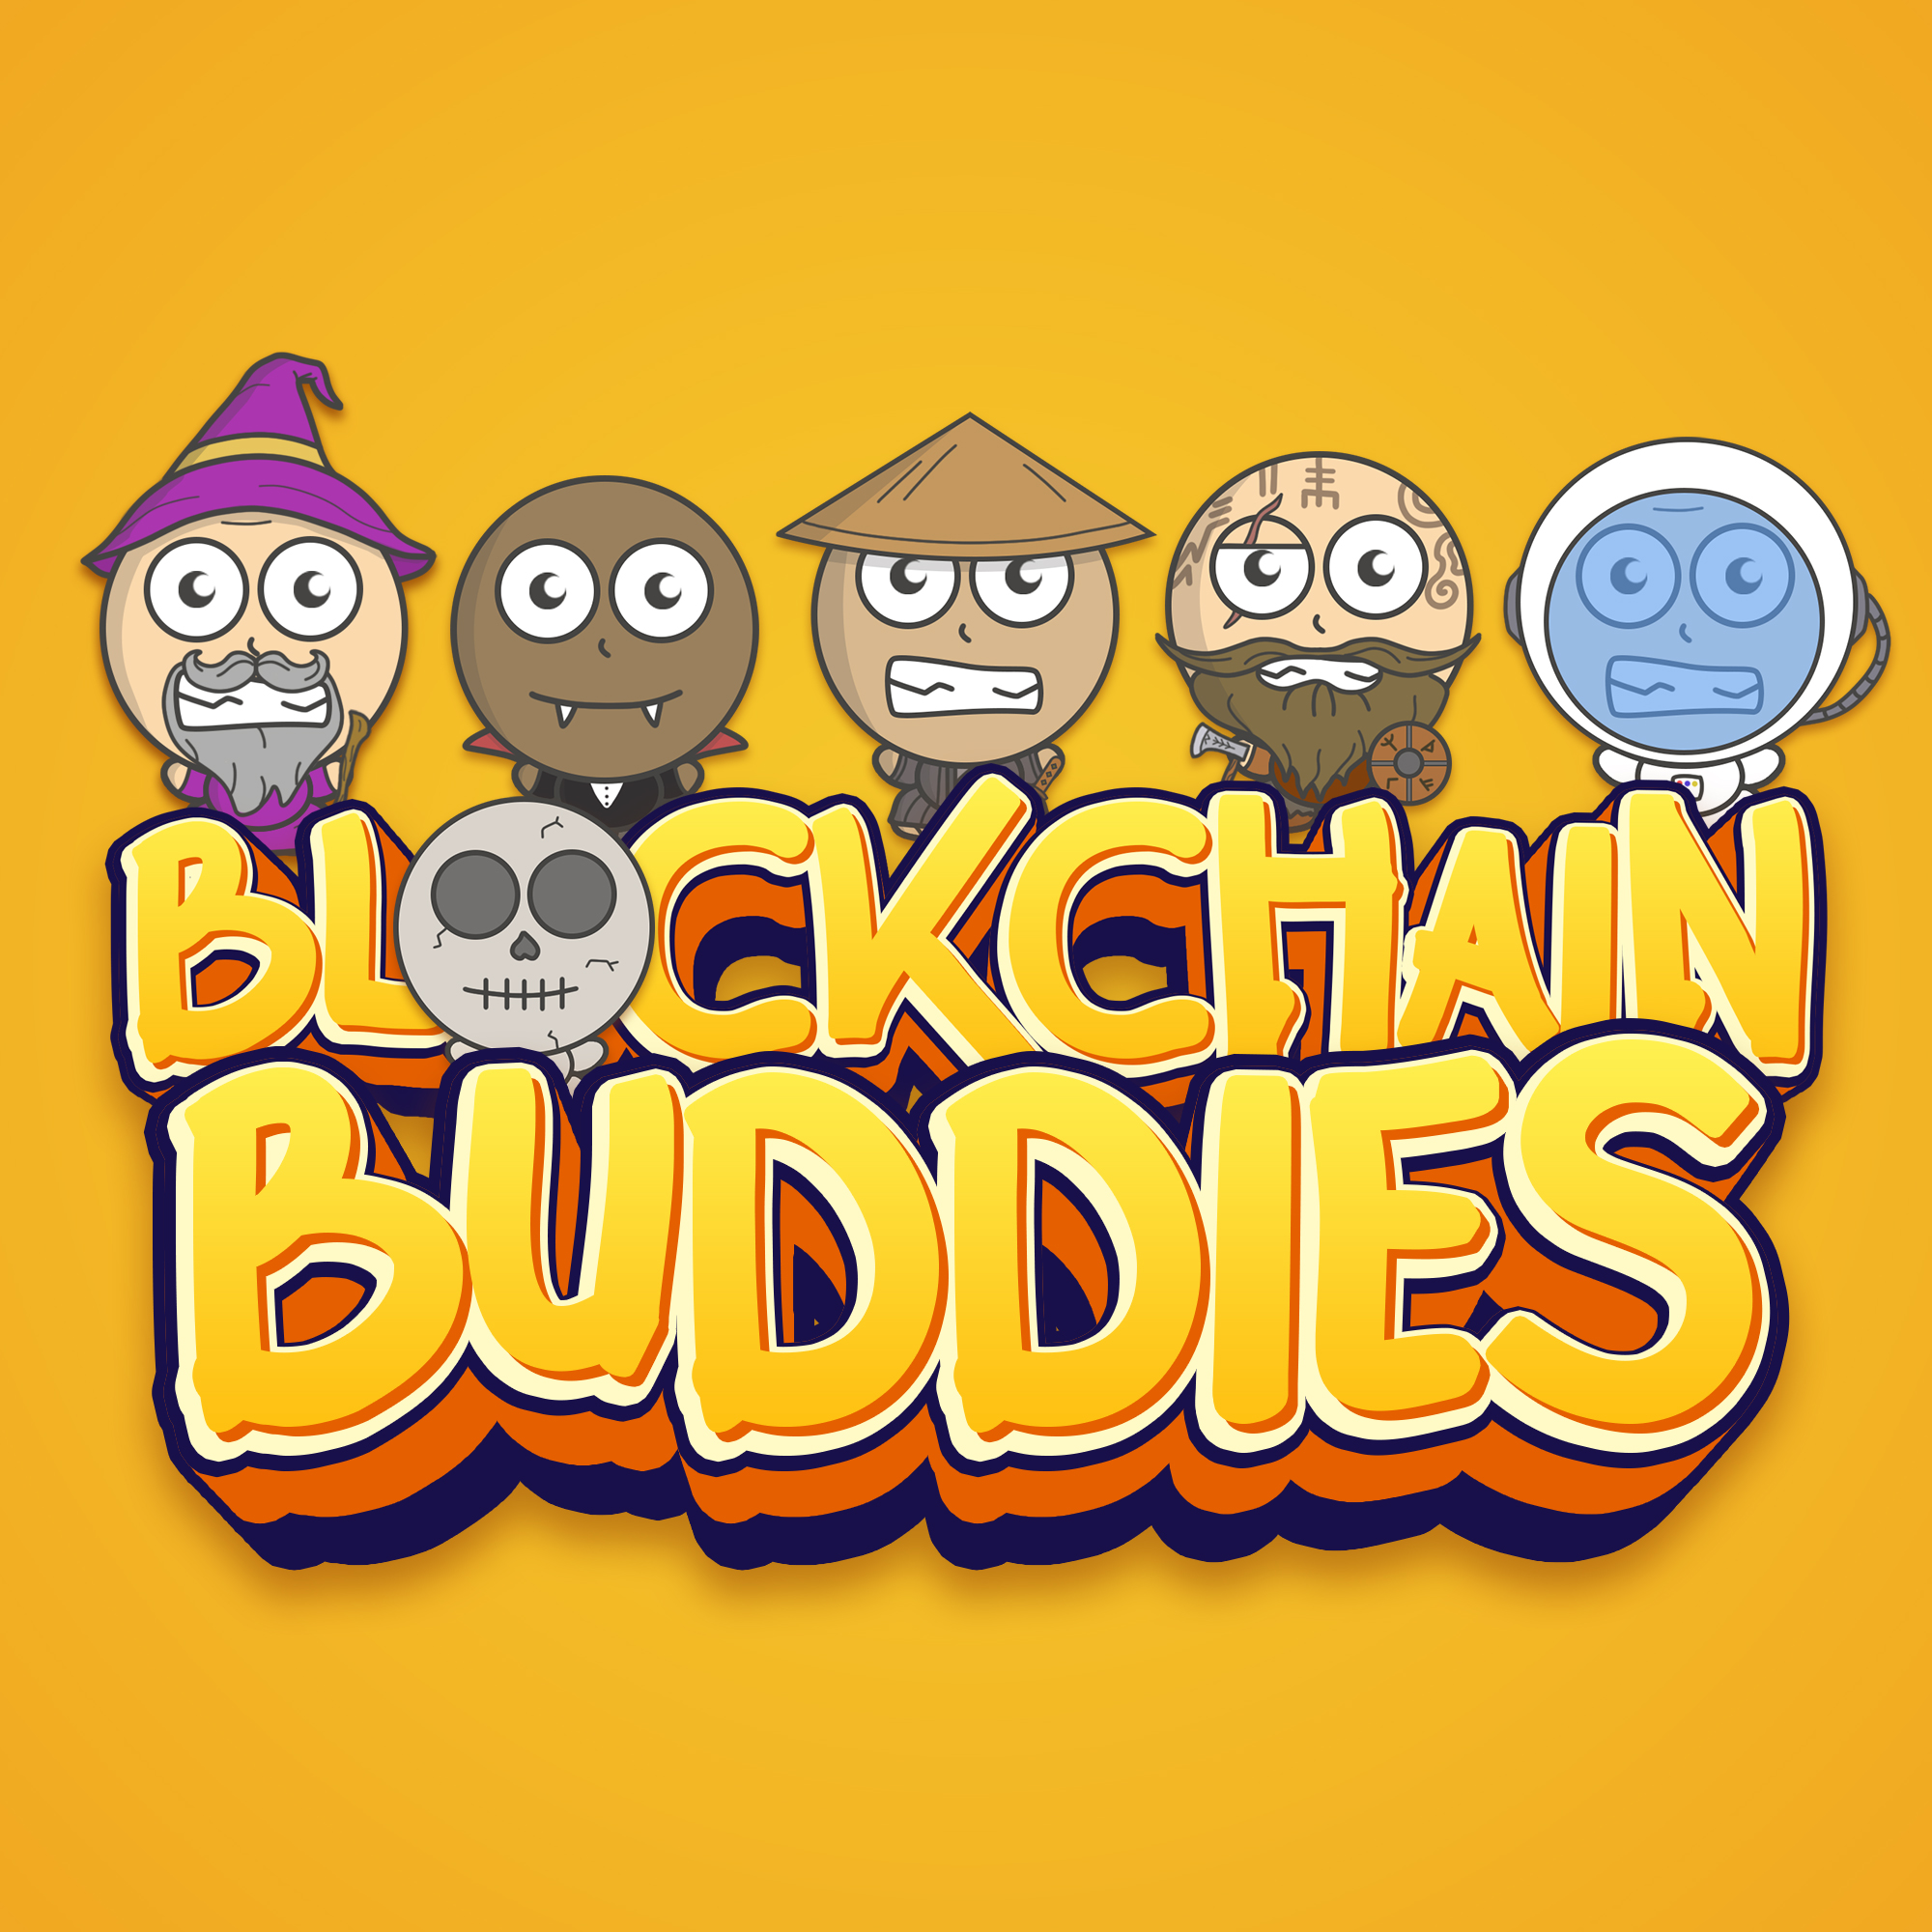 BlockChain Buddies, A Unique NFT Project Made For Buddies